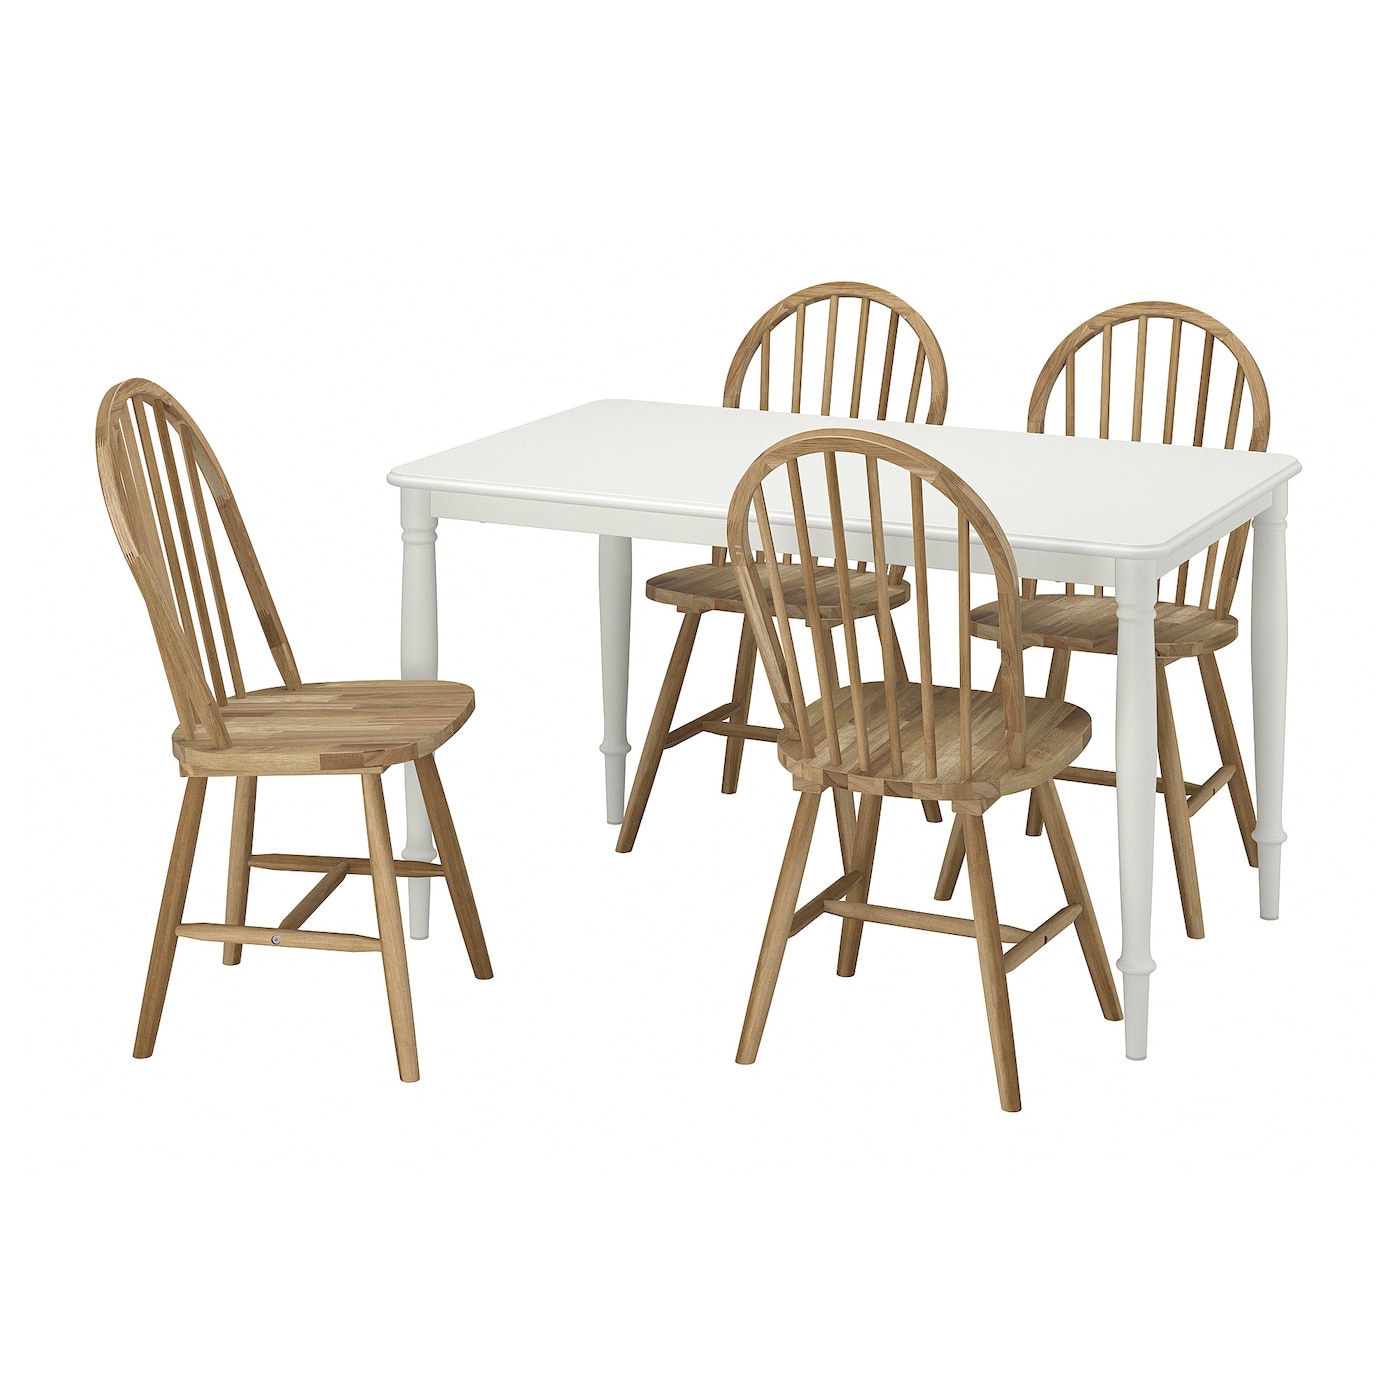 Стол и 4 стула - DANDERYD / SKOGSTA IKEA/ ДАНДЭРЮД / СКОГСТА ИКЕА, 130х75/94х43 см,  белый/коричневый